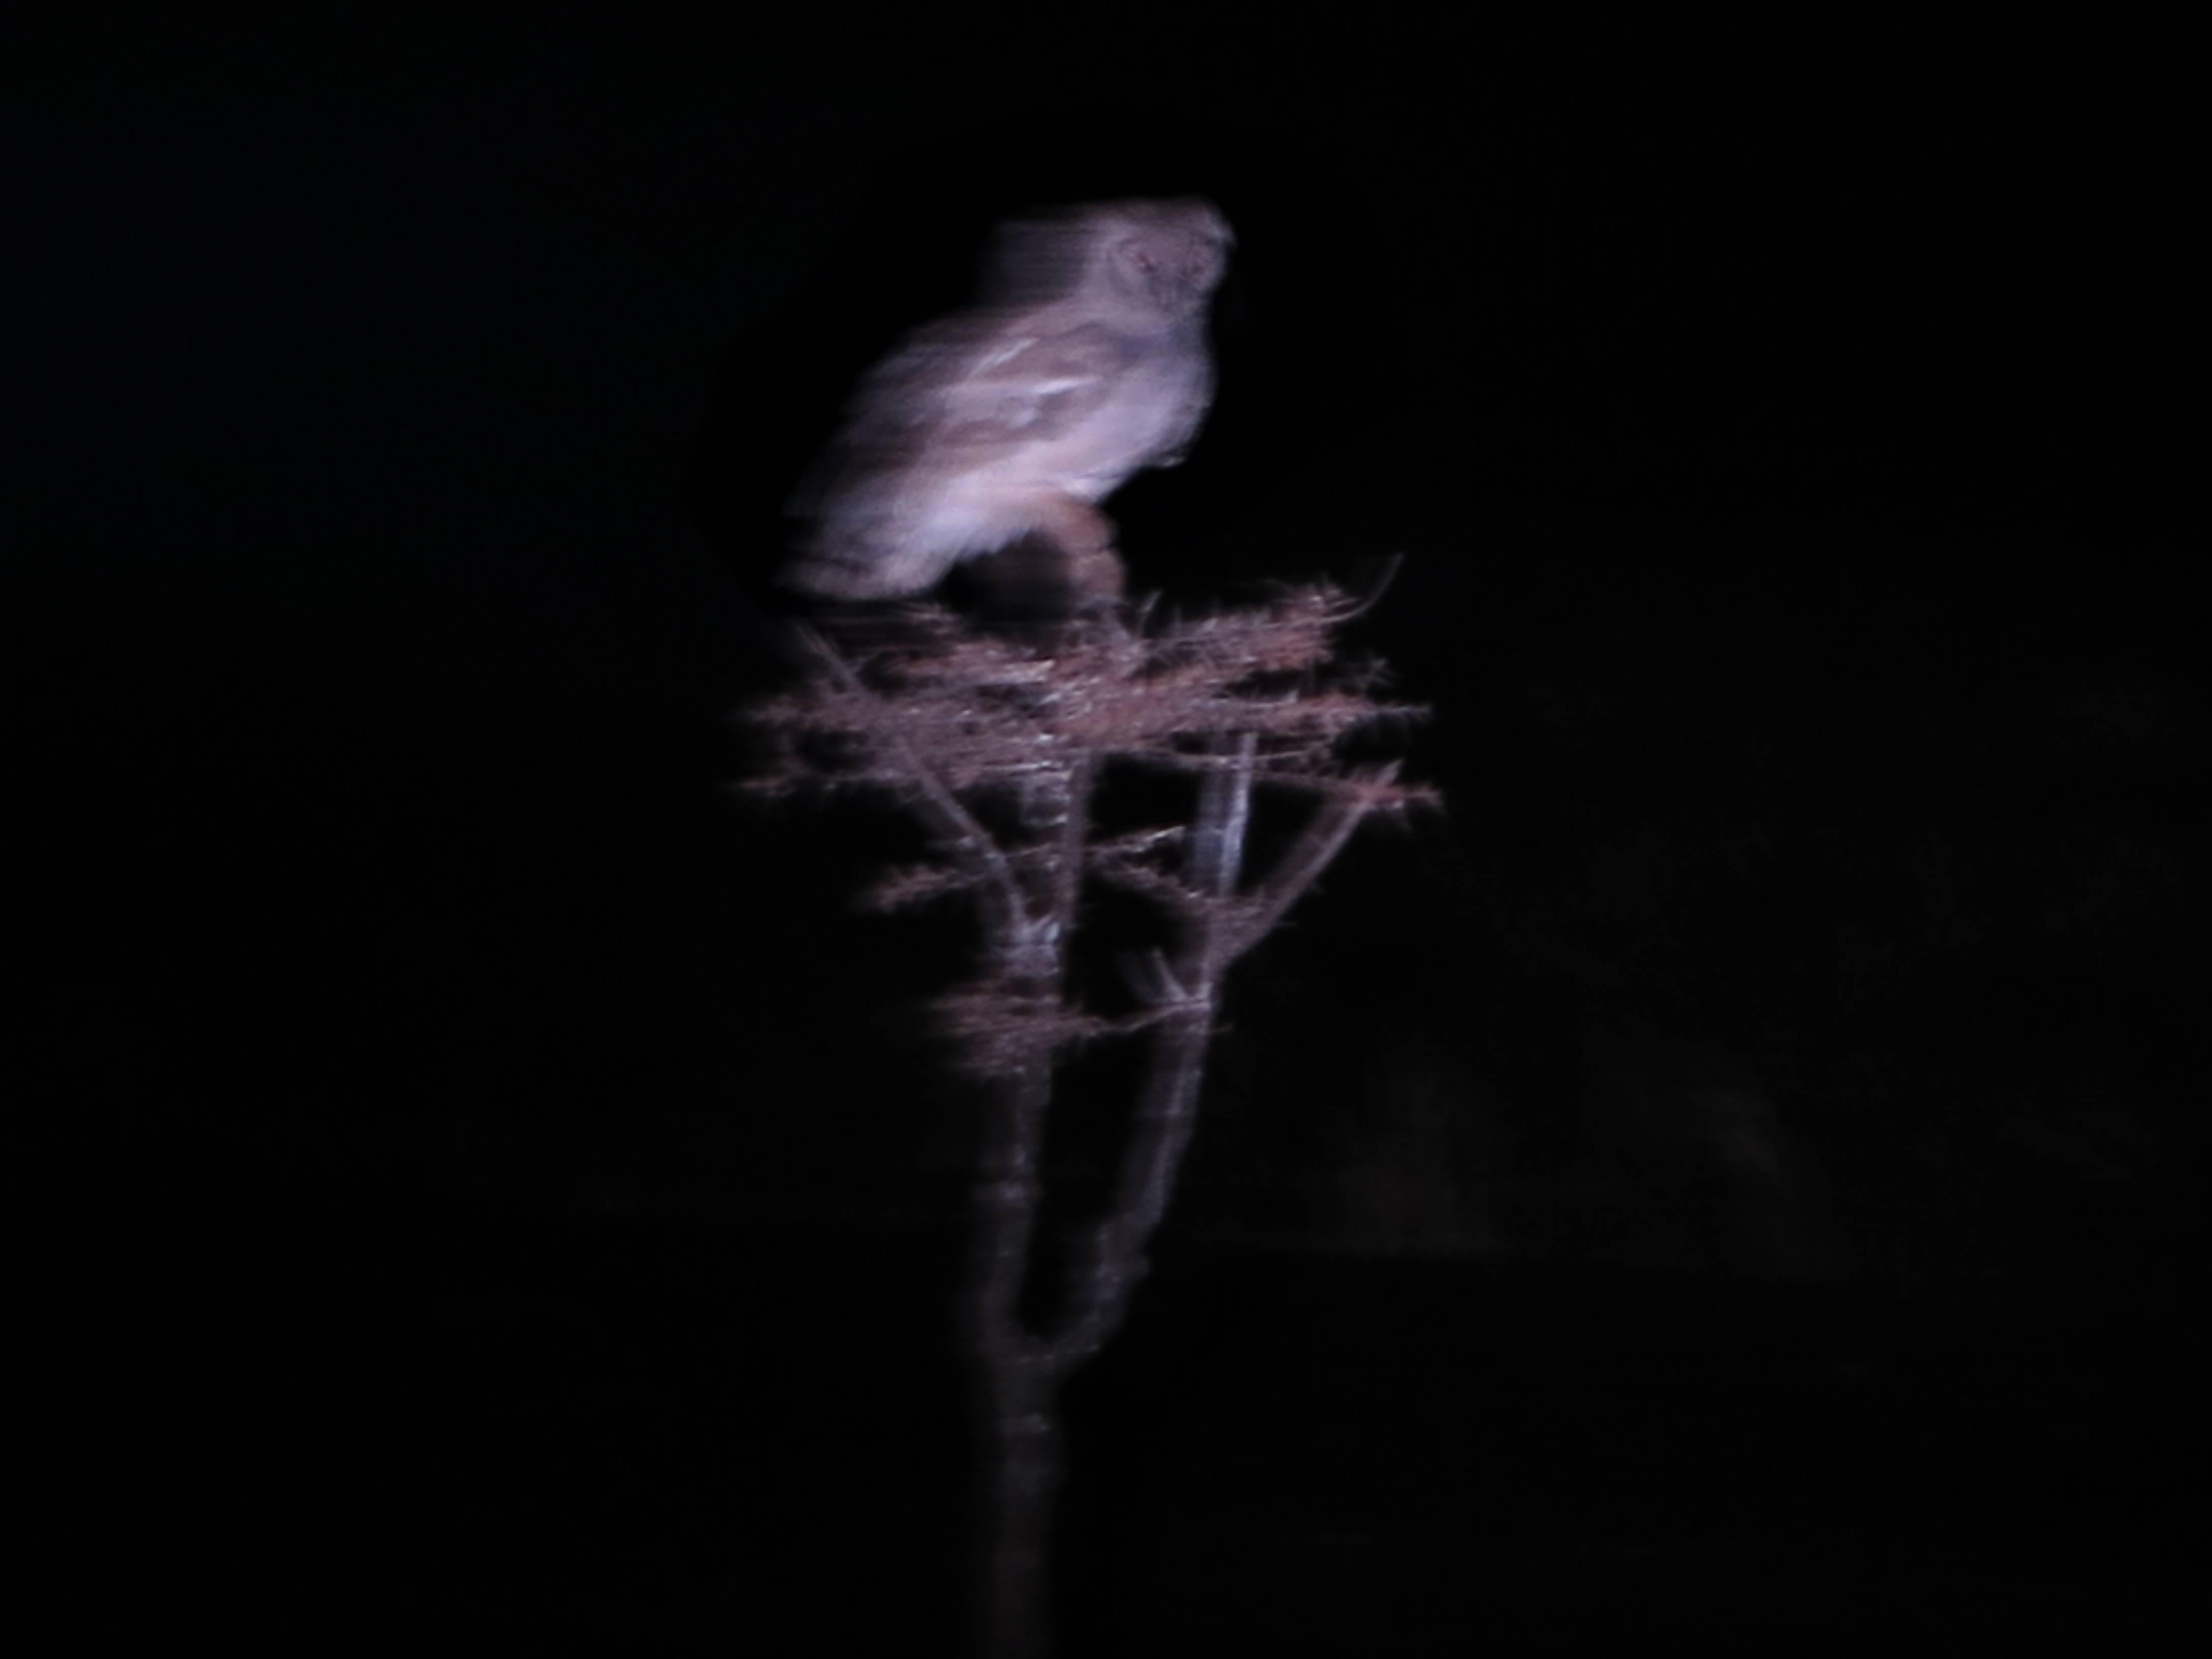 John Casado Black and White Photograph - Bundi / Night Owl